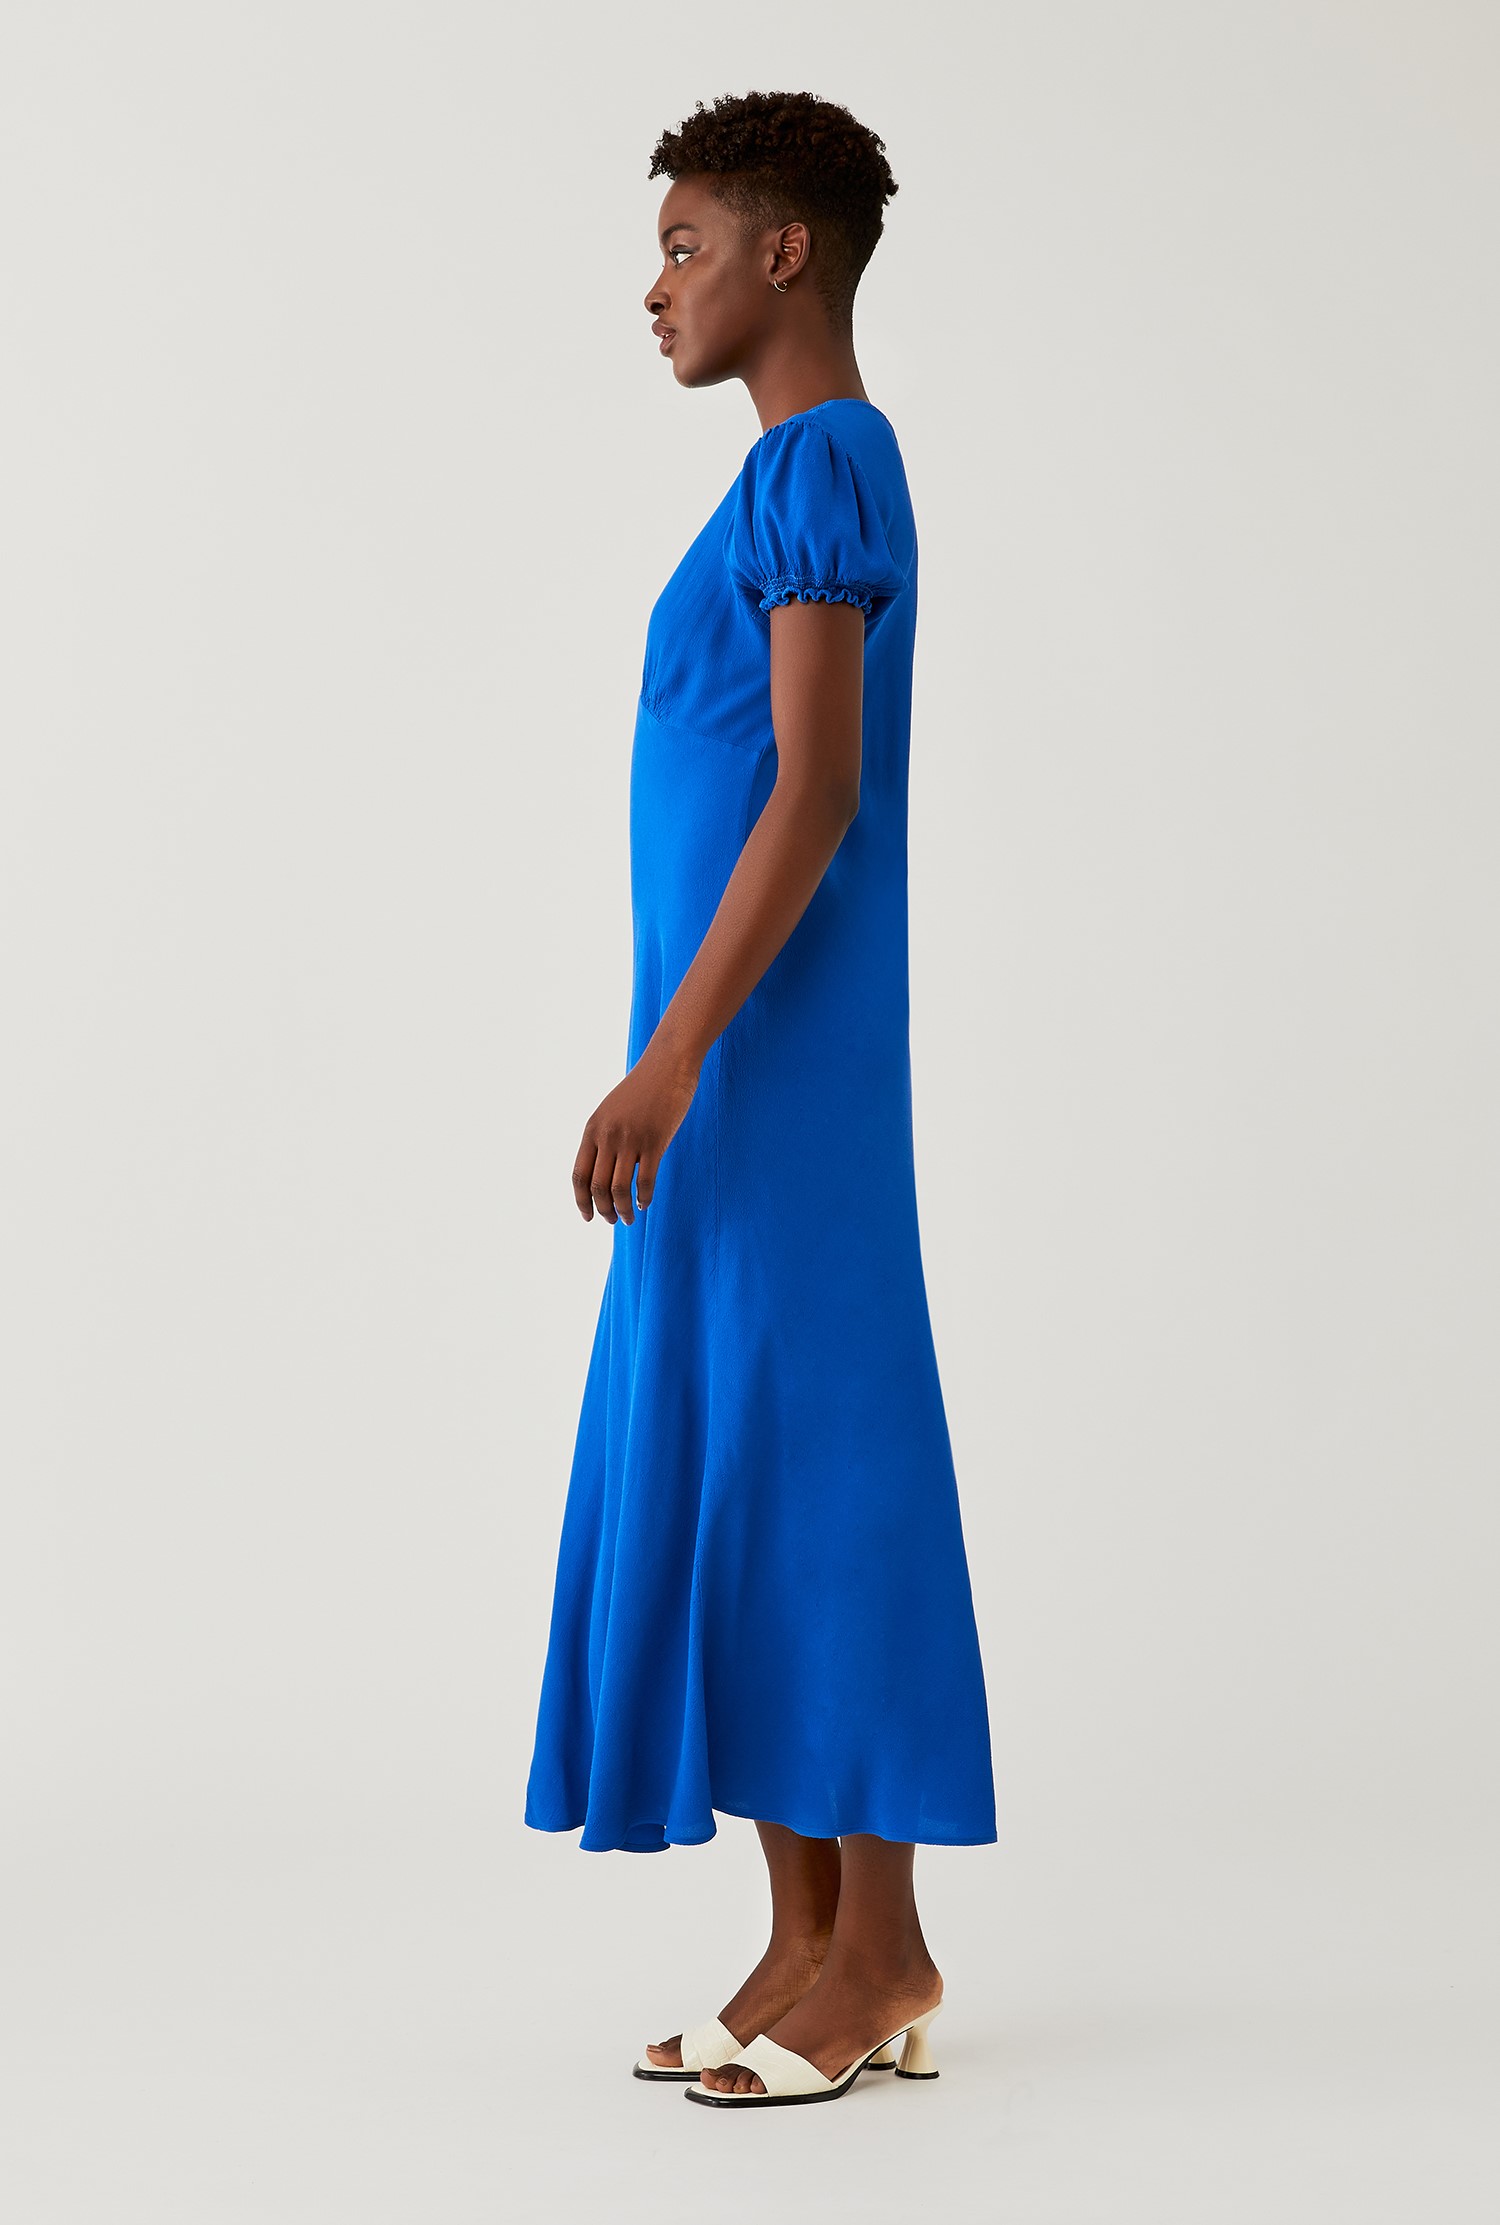 Poet Blue Midi Dress with Short Sleeves | Ghost London